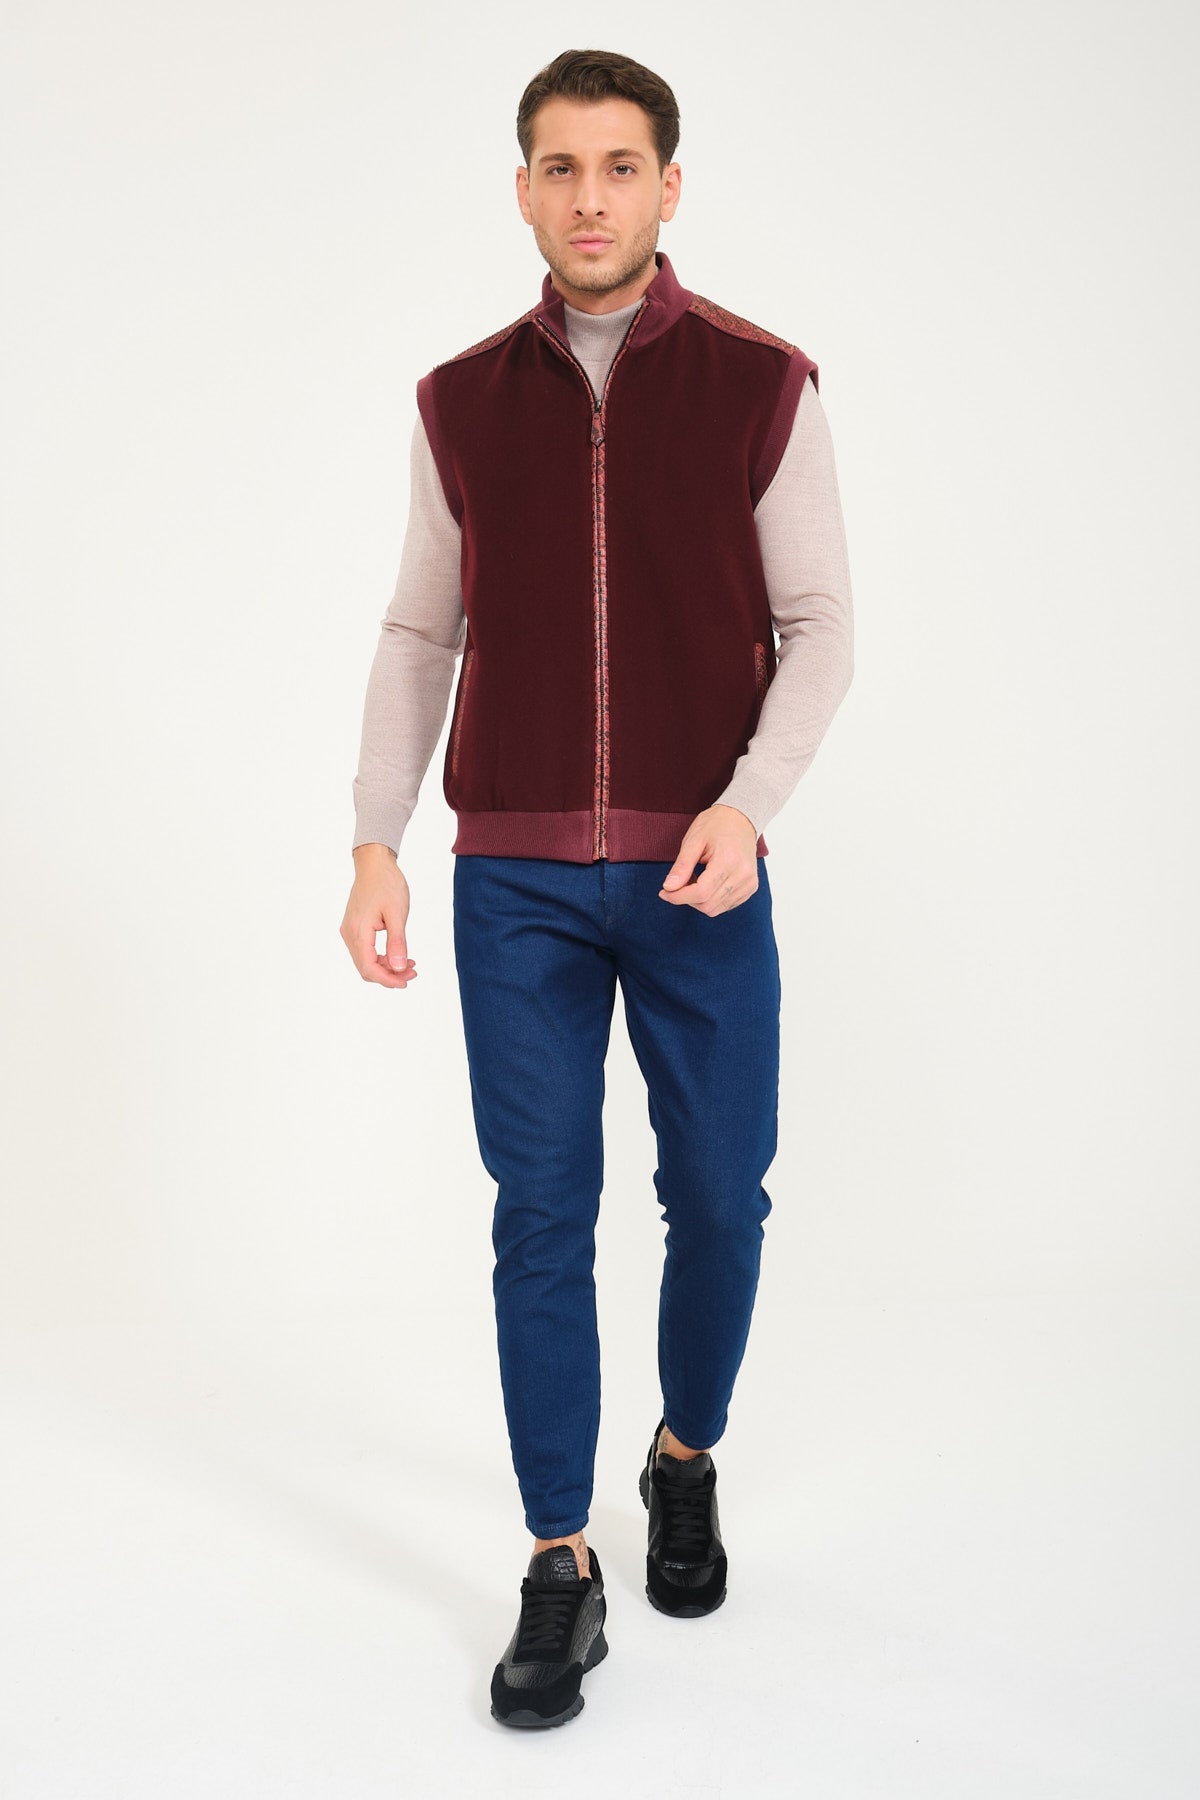 Burgundy Cashmere / Python Leather Vest